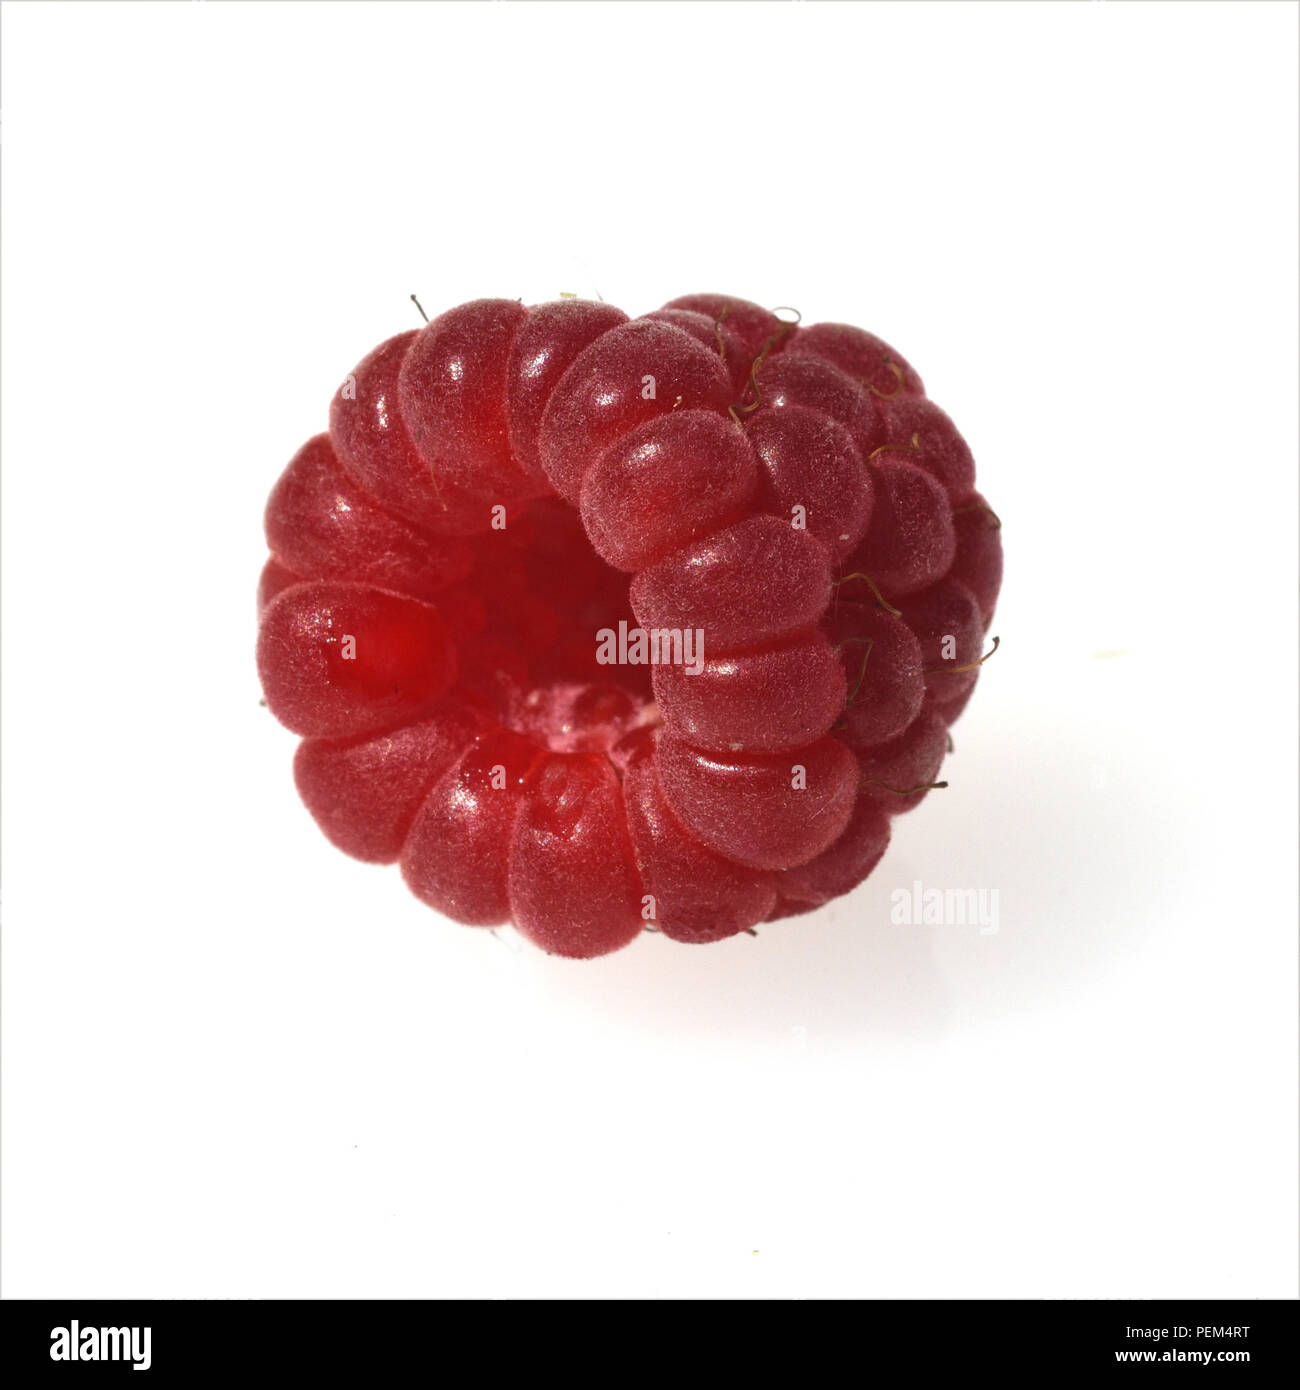 Himbeeren, Rubus, idaeus Stock Photo